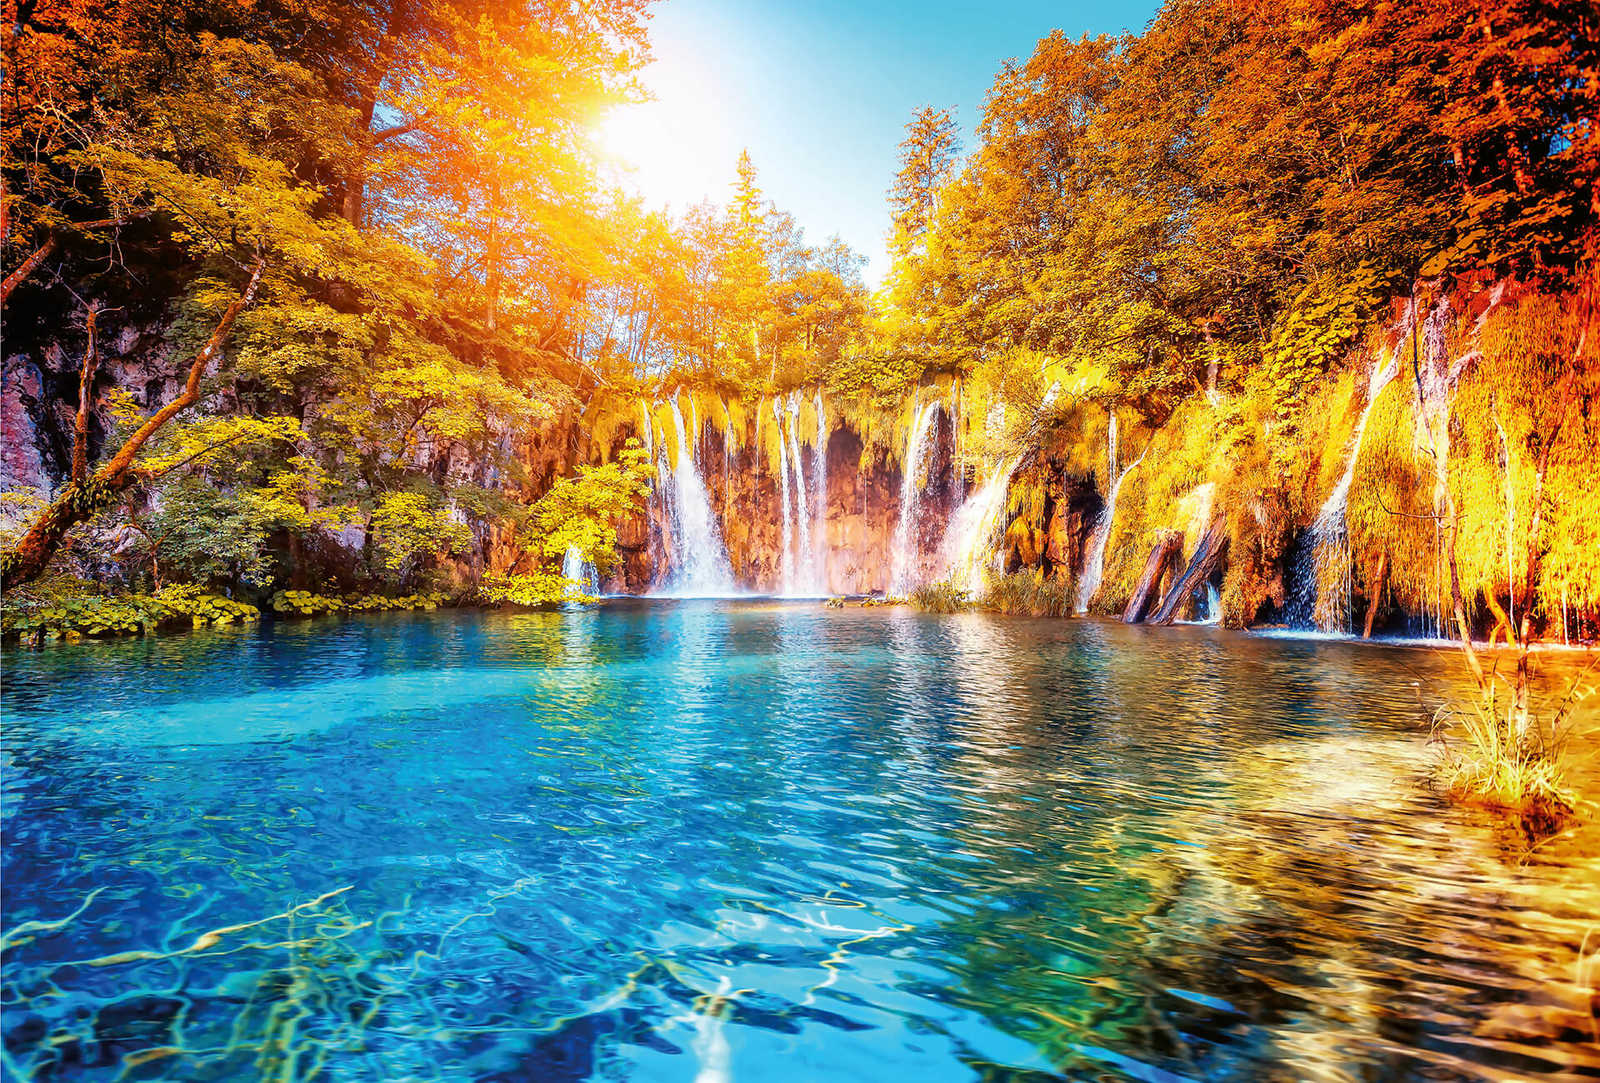         Landscape mural waterfall & lake in Croatia
    